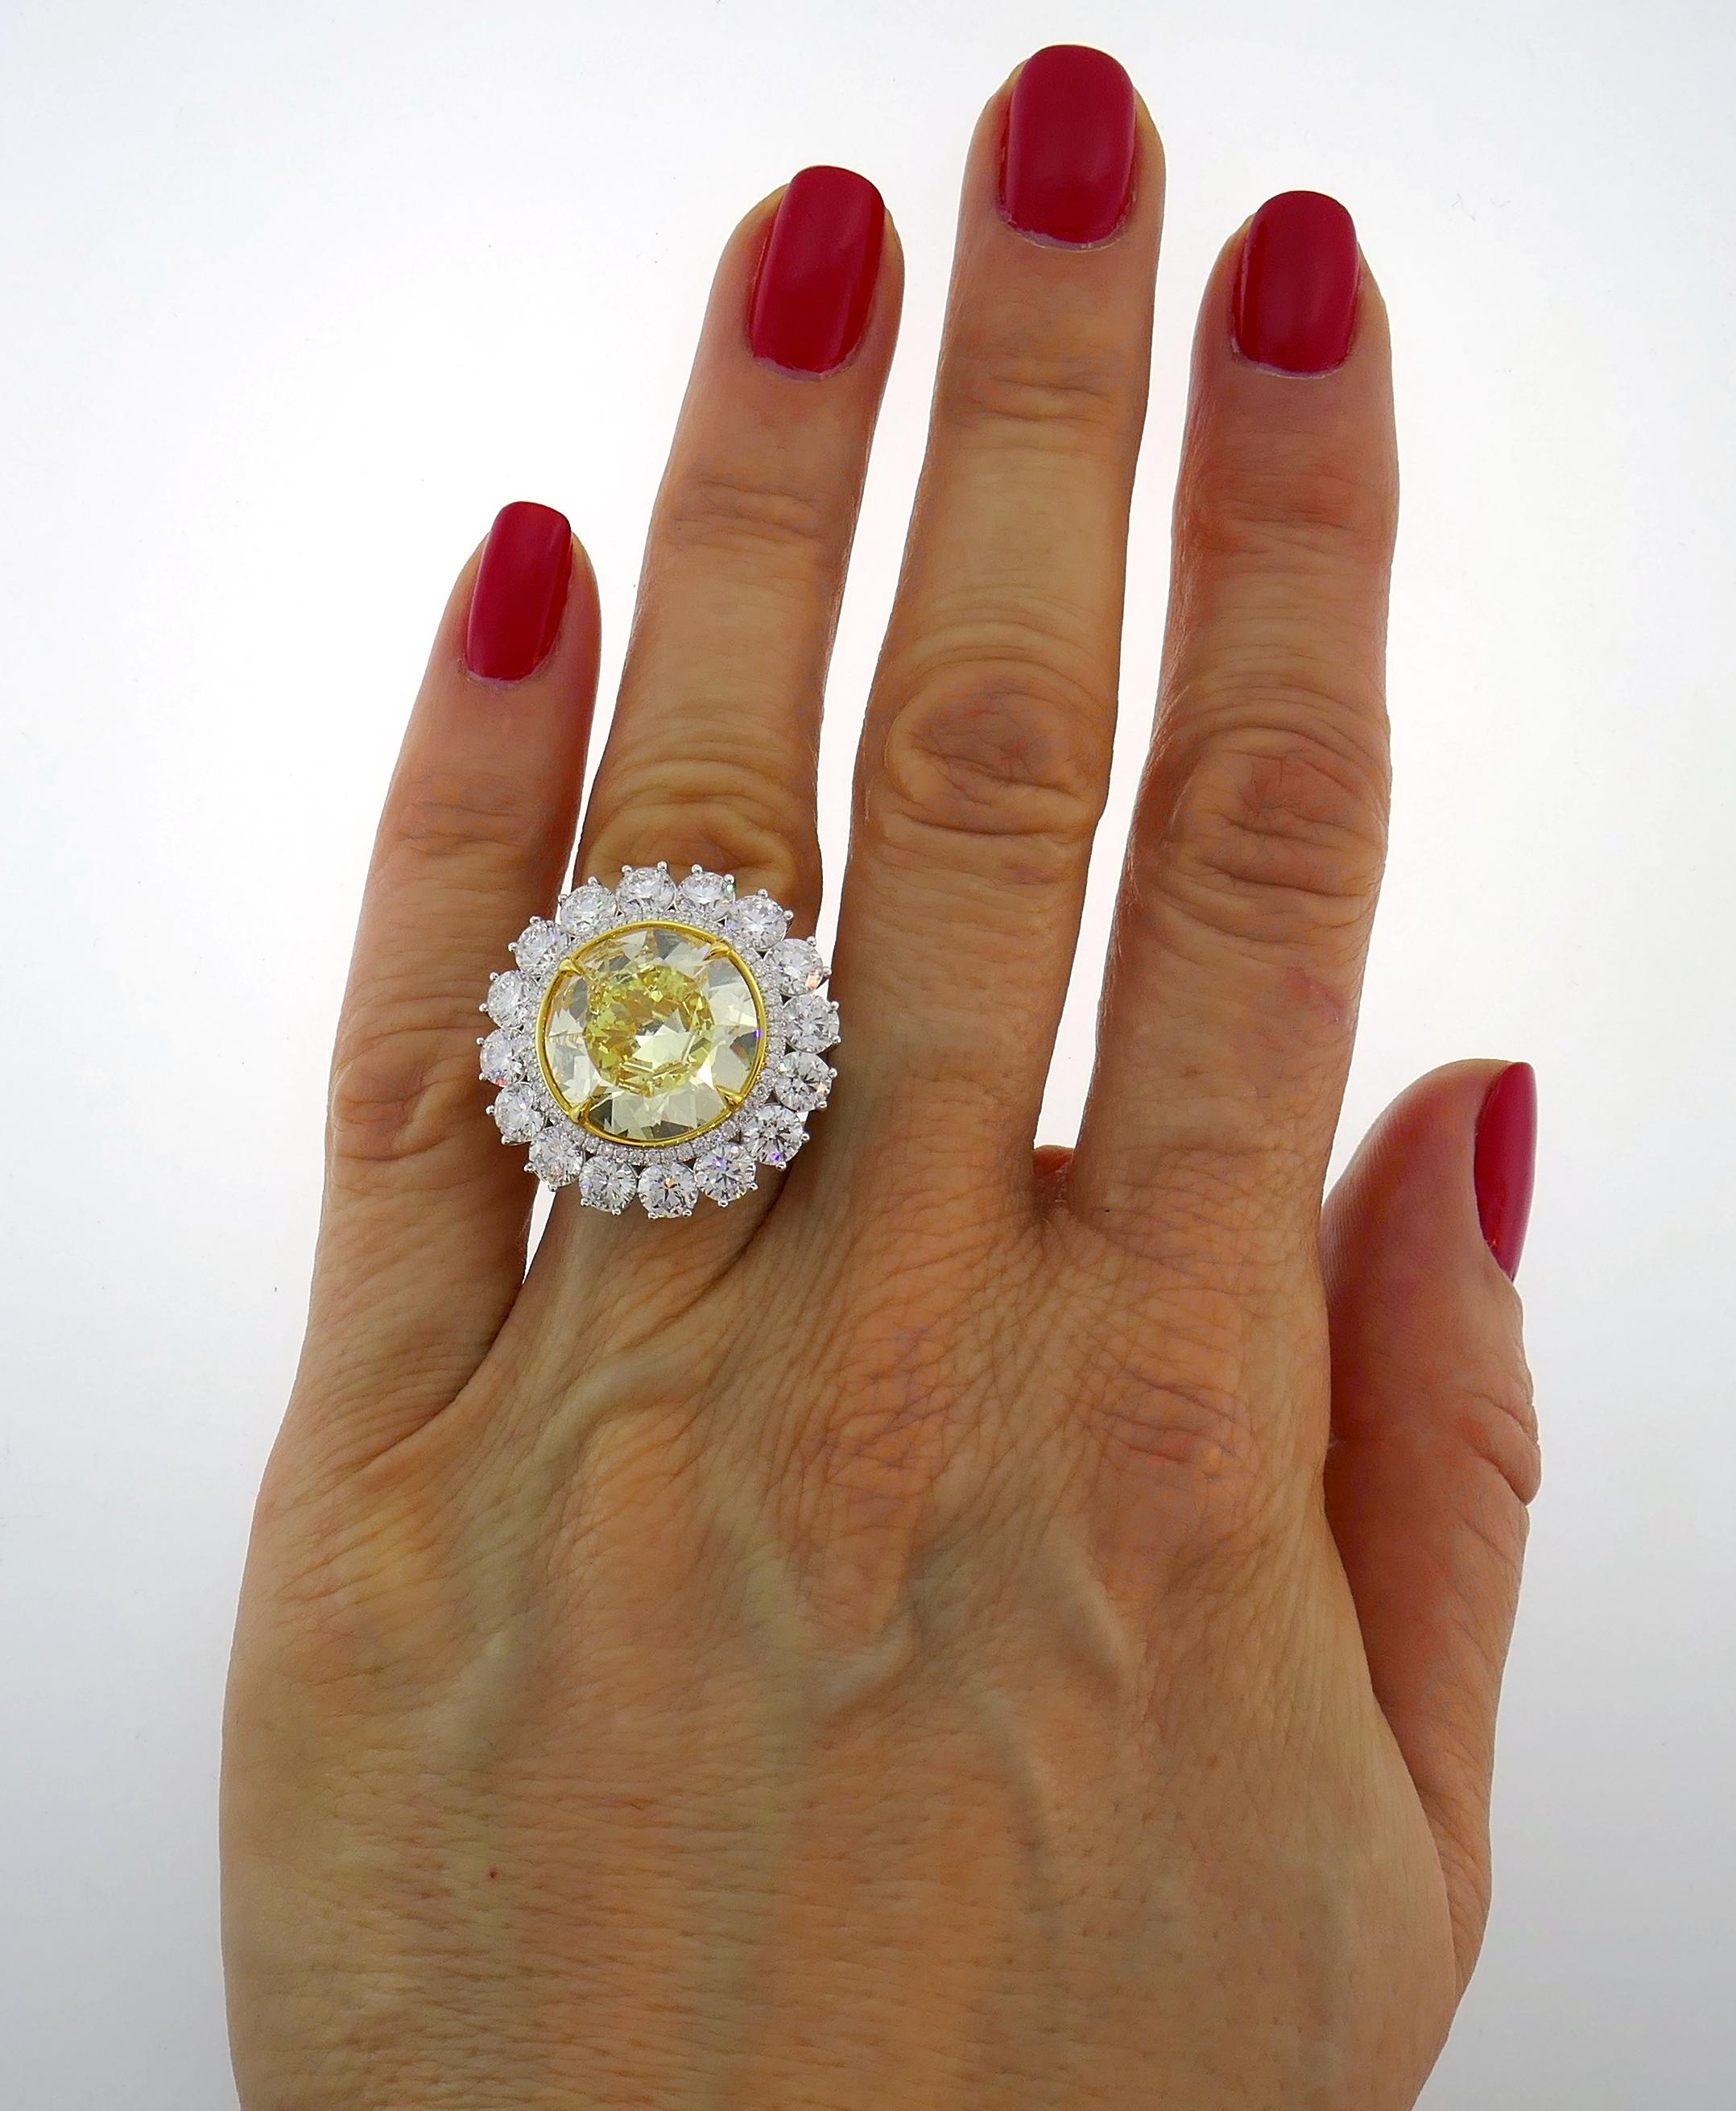 Fancy Intense Yellow Diamond White Gold Ring 10.04 Carat VS2 GIA 3